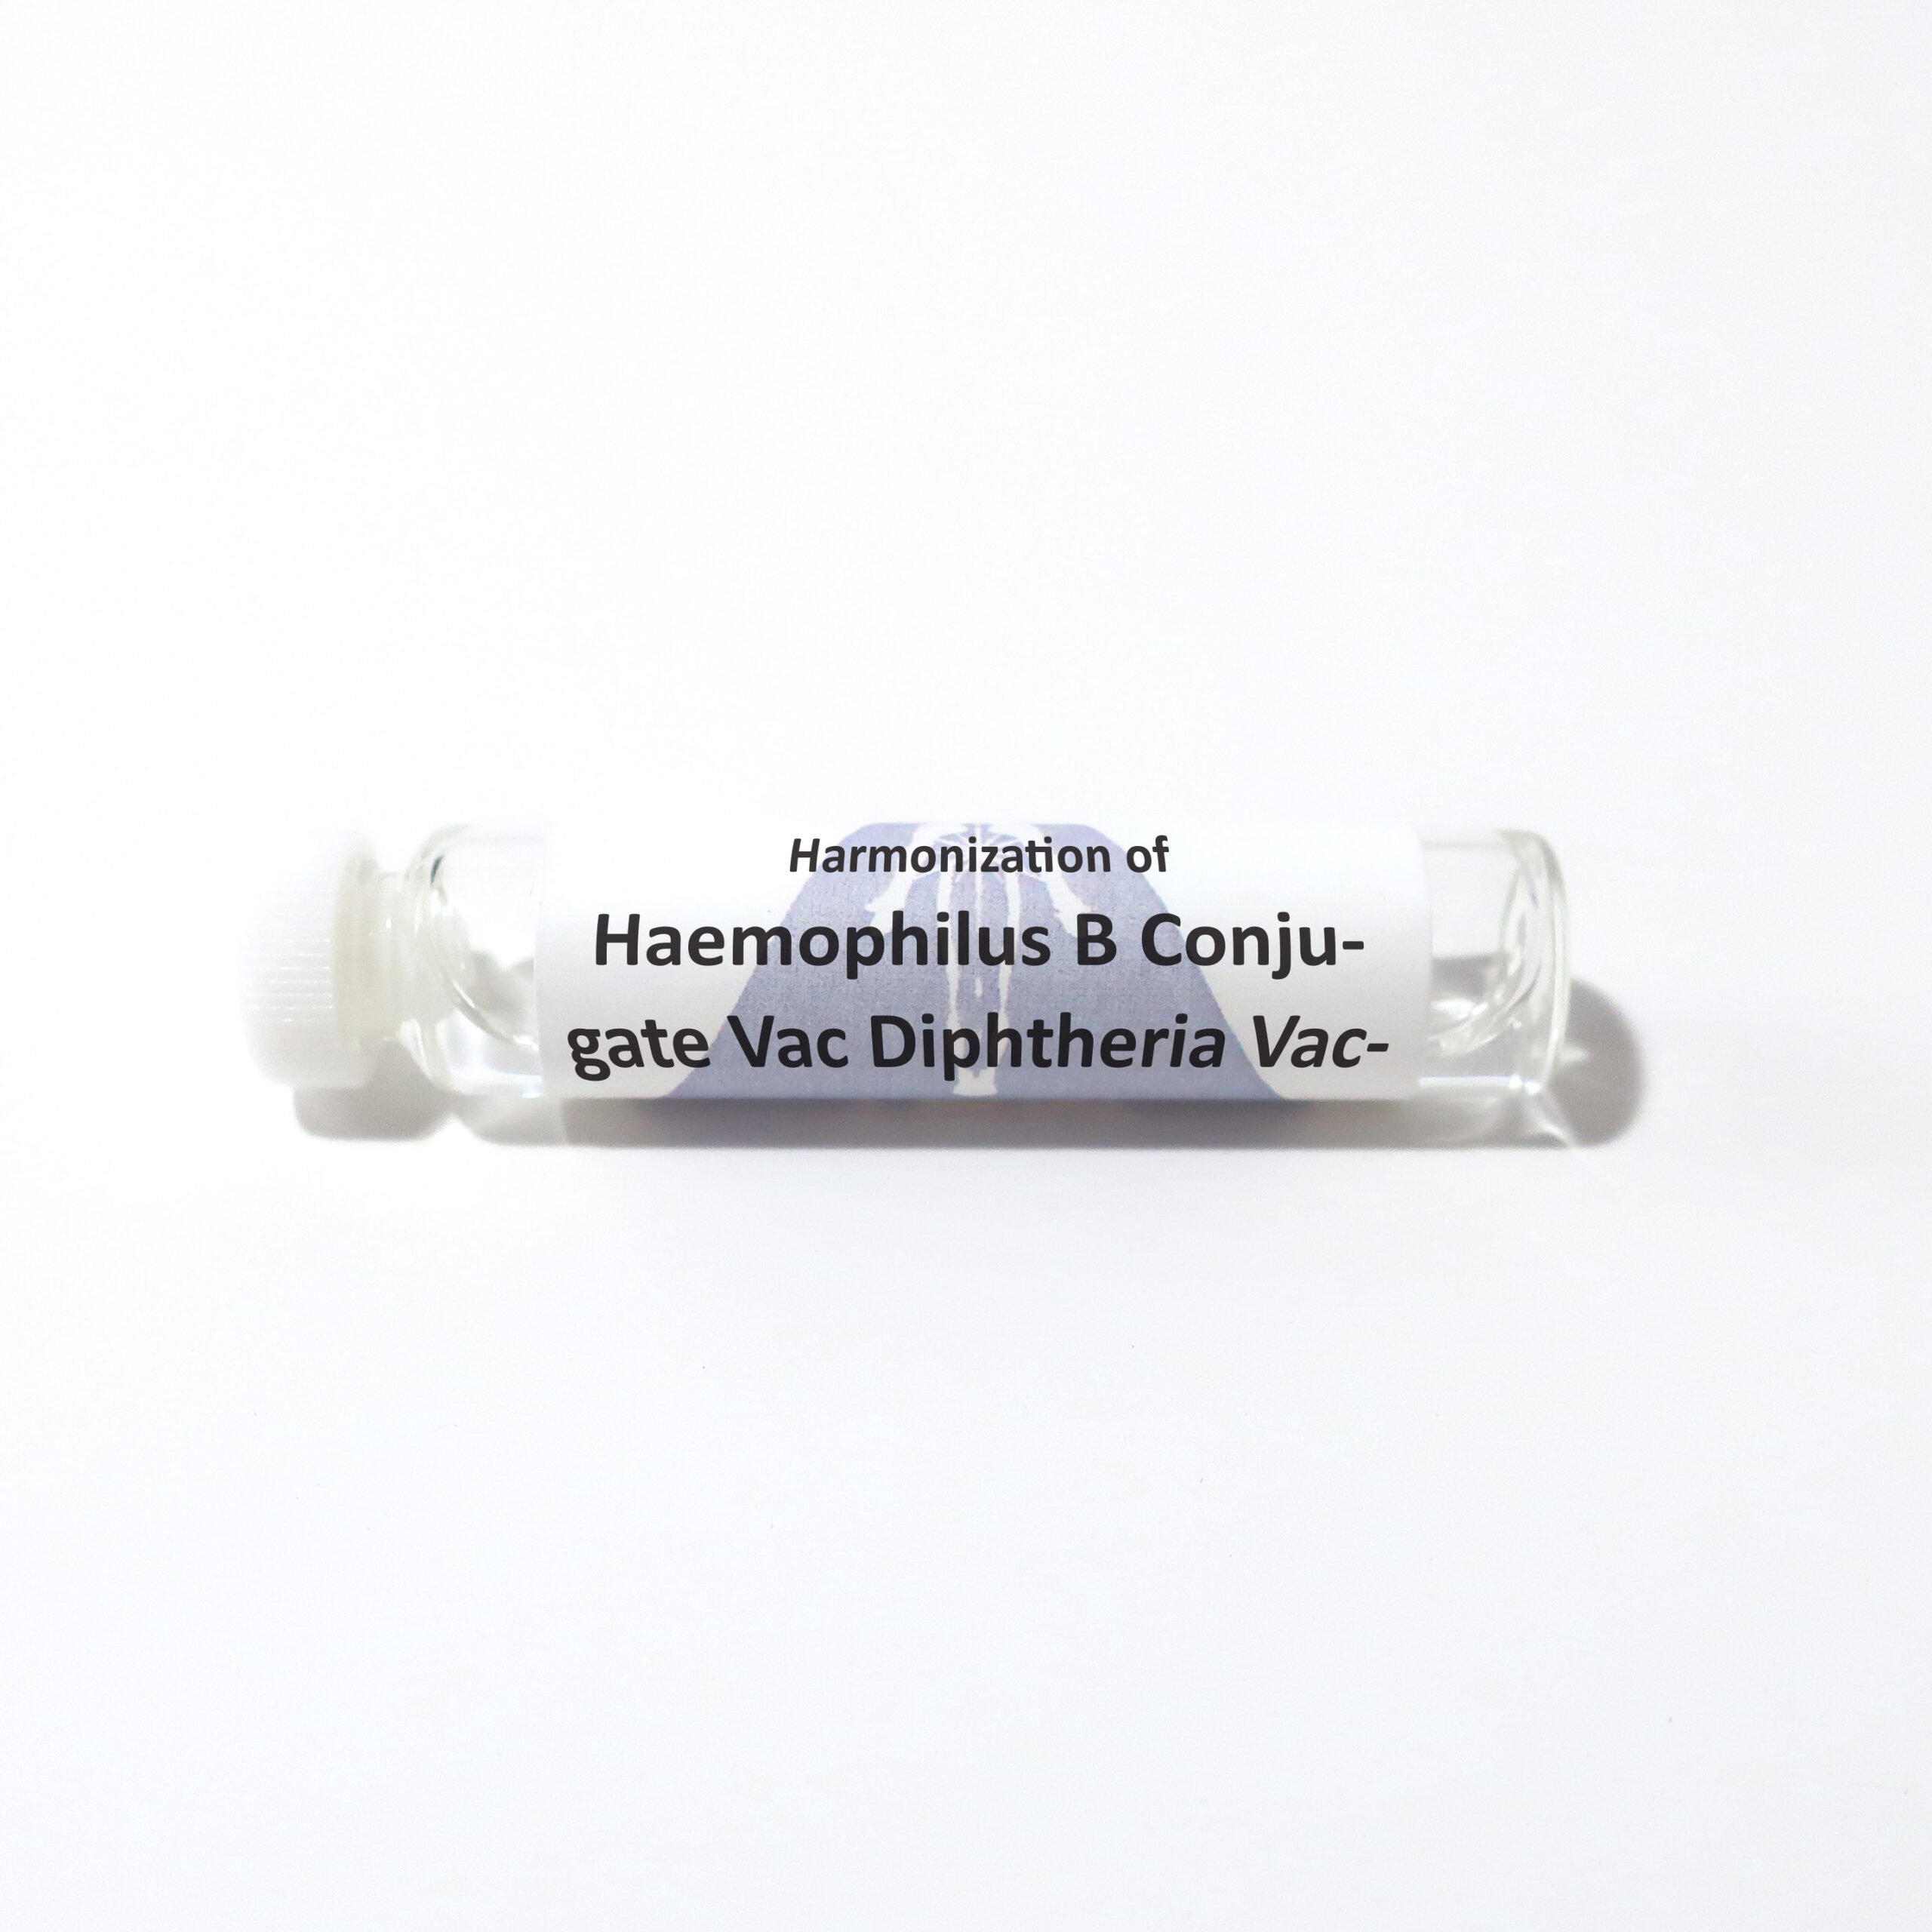 Haemophilus B Conjugate & Diphtheria Vaccine